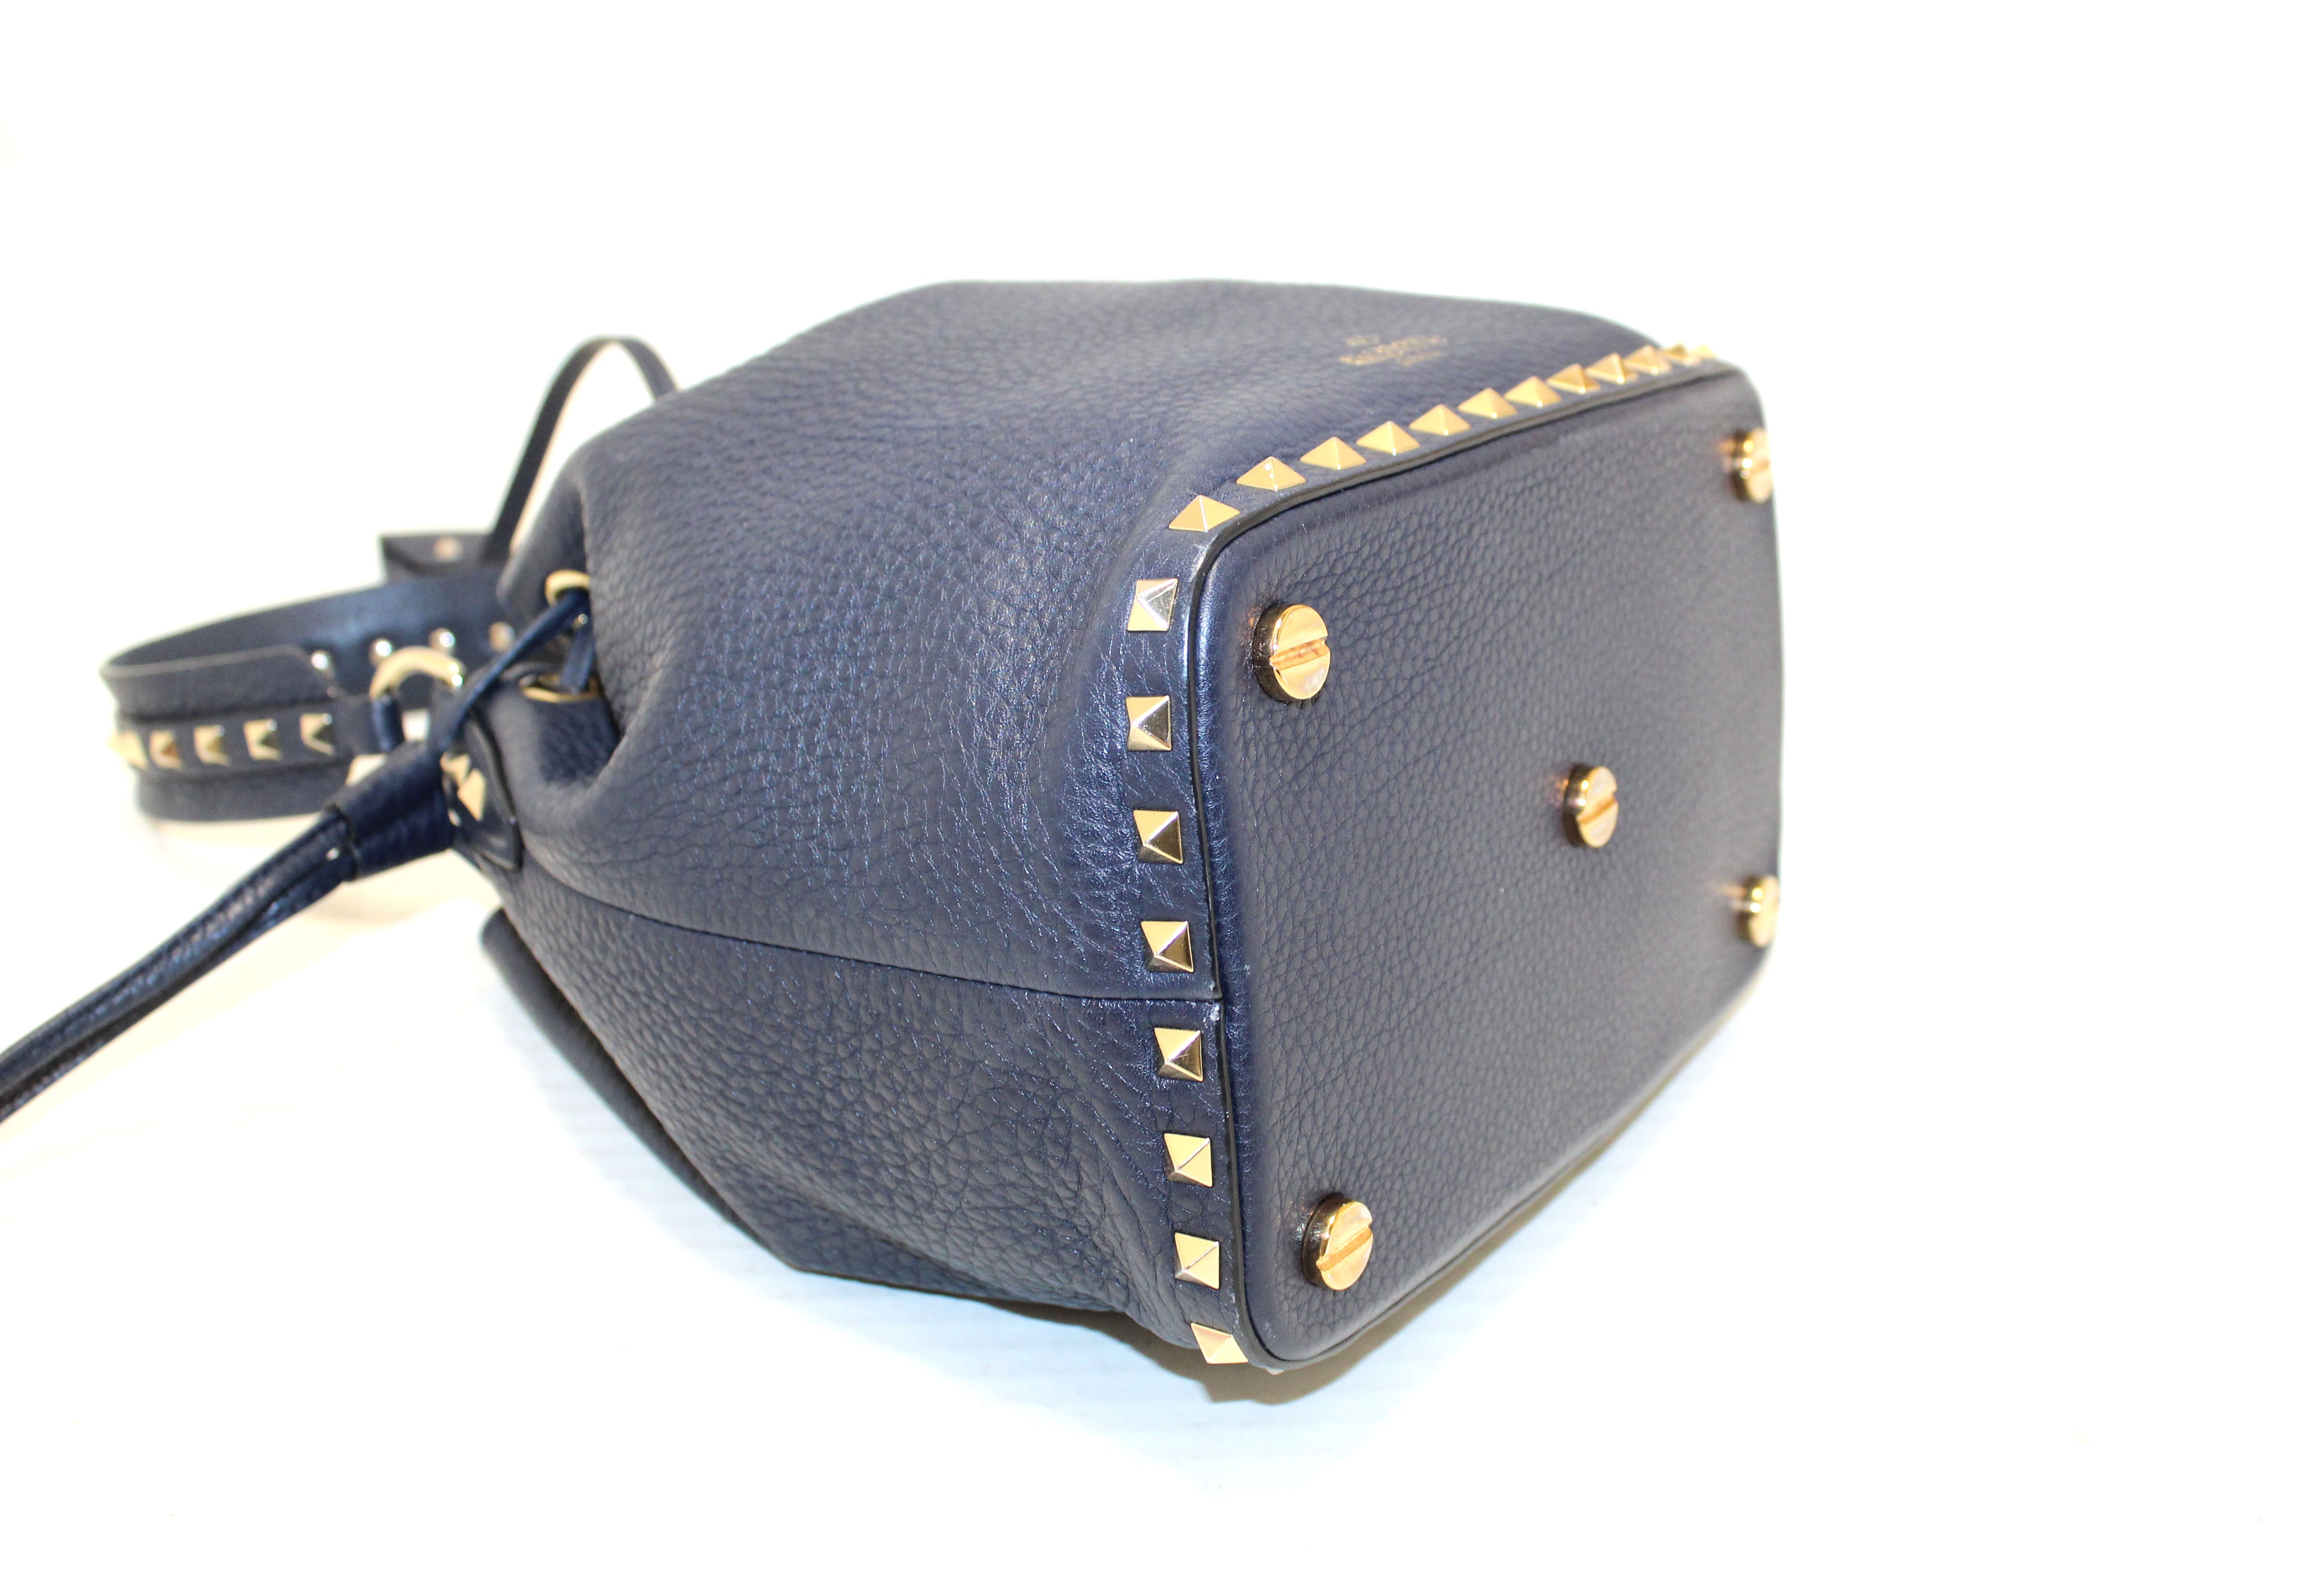 Authentic Valentino Garavani Navy Blue Rockstud Small Bucket Bag